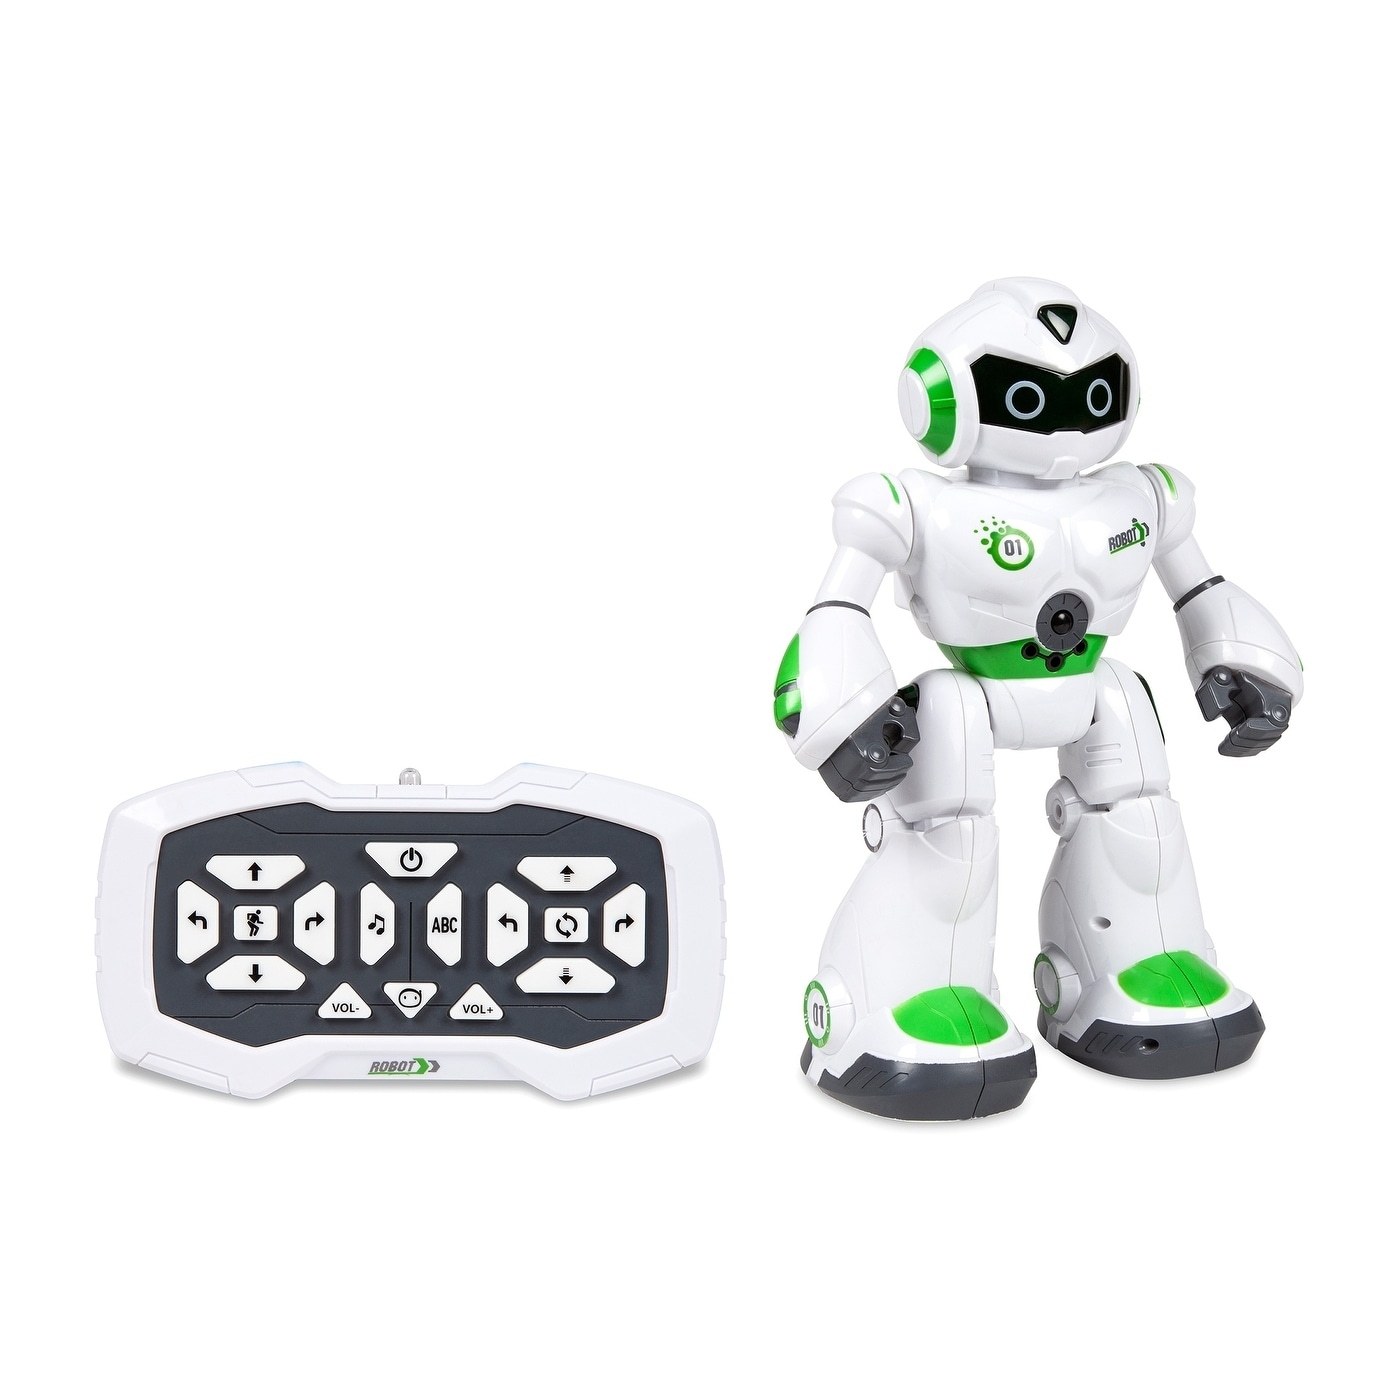 control robot remote control robot